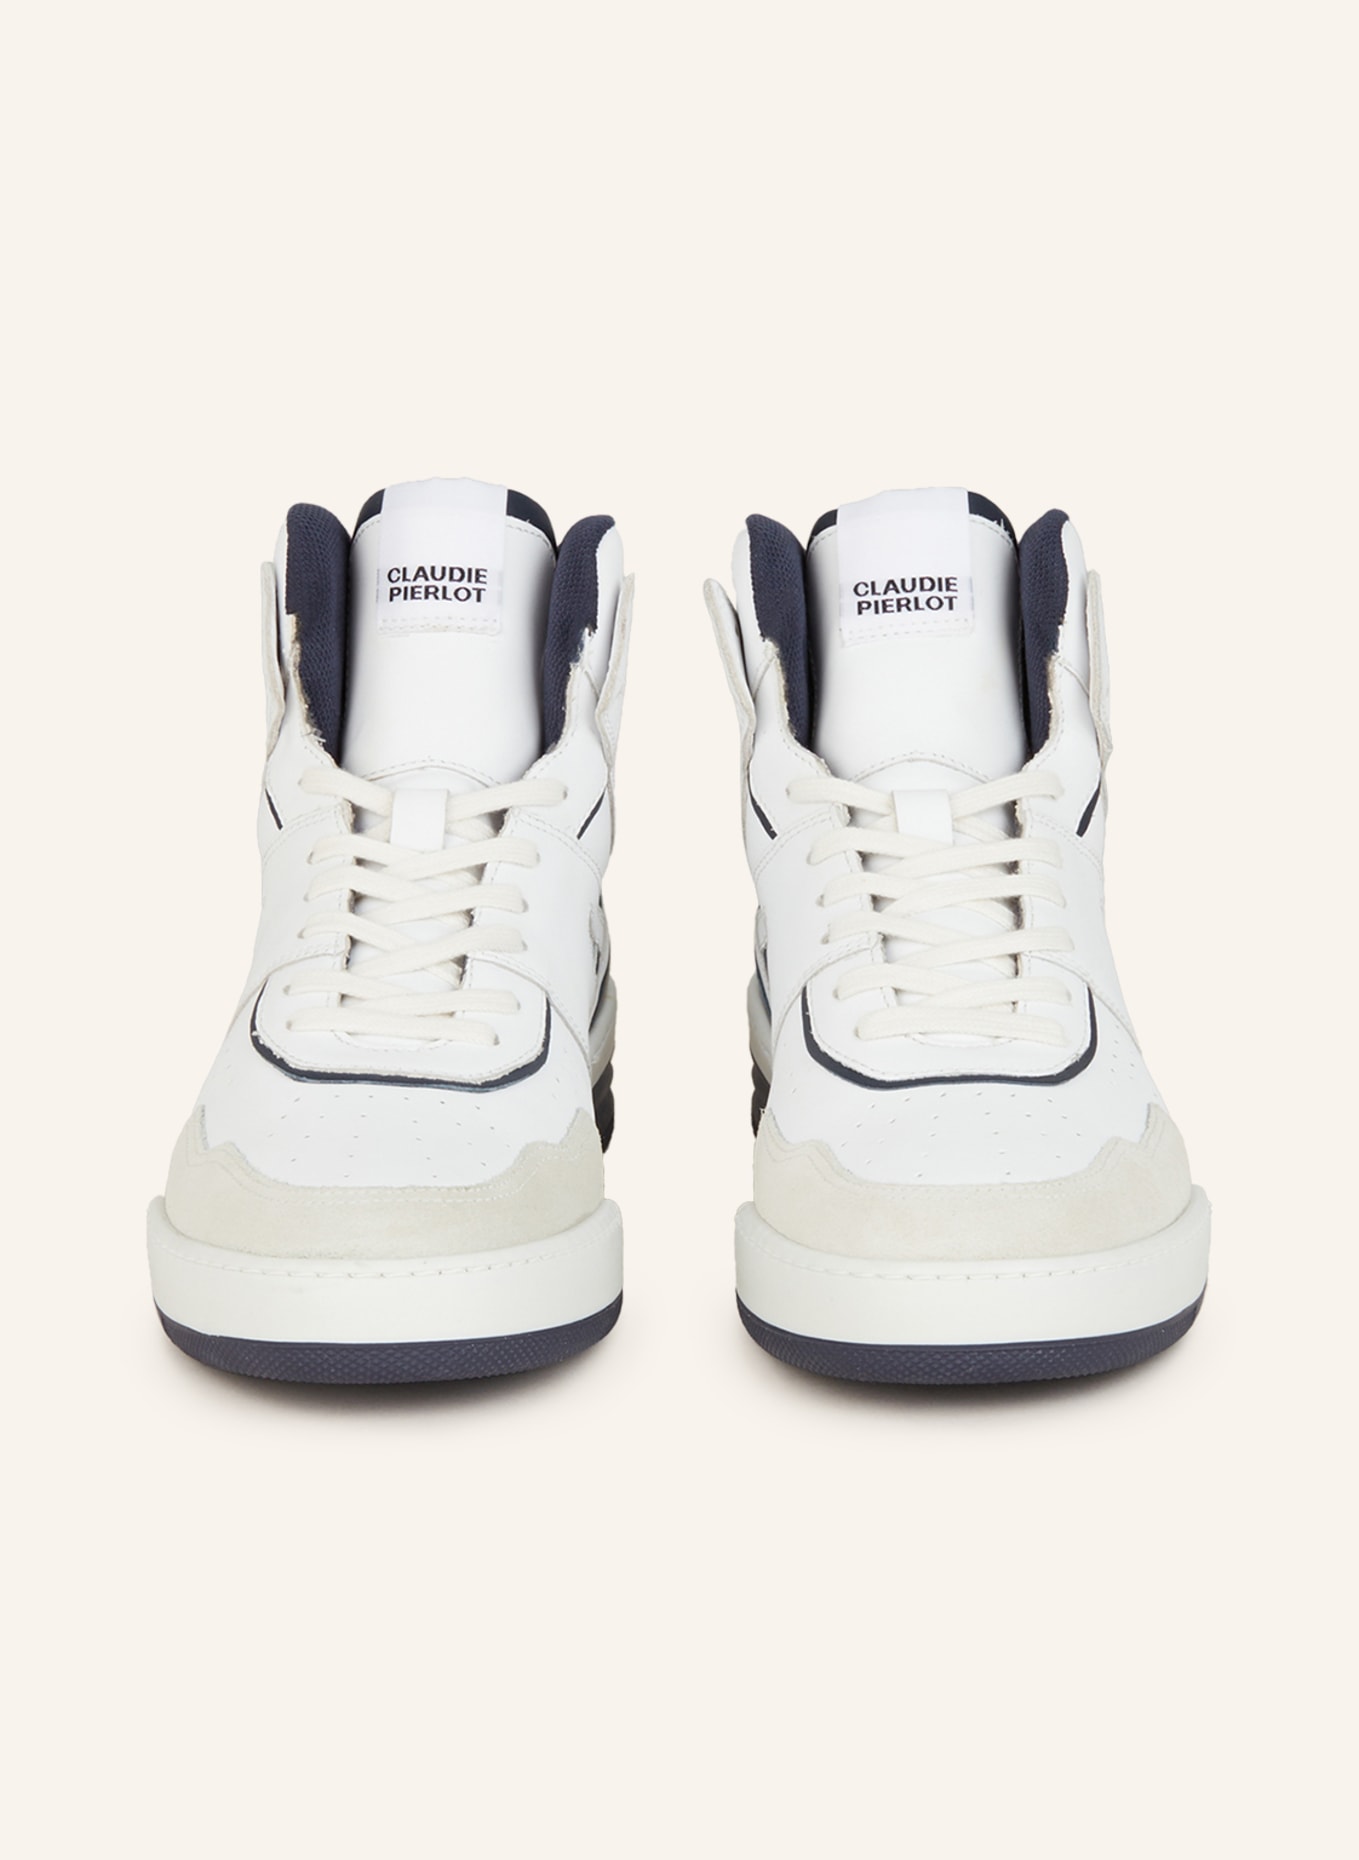 CLAUDIE PIERLOT Hightop-Sneaker, Farbe: WEISS/ CREME/ DUNKELBLAU (Bild 3)